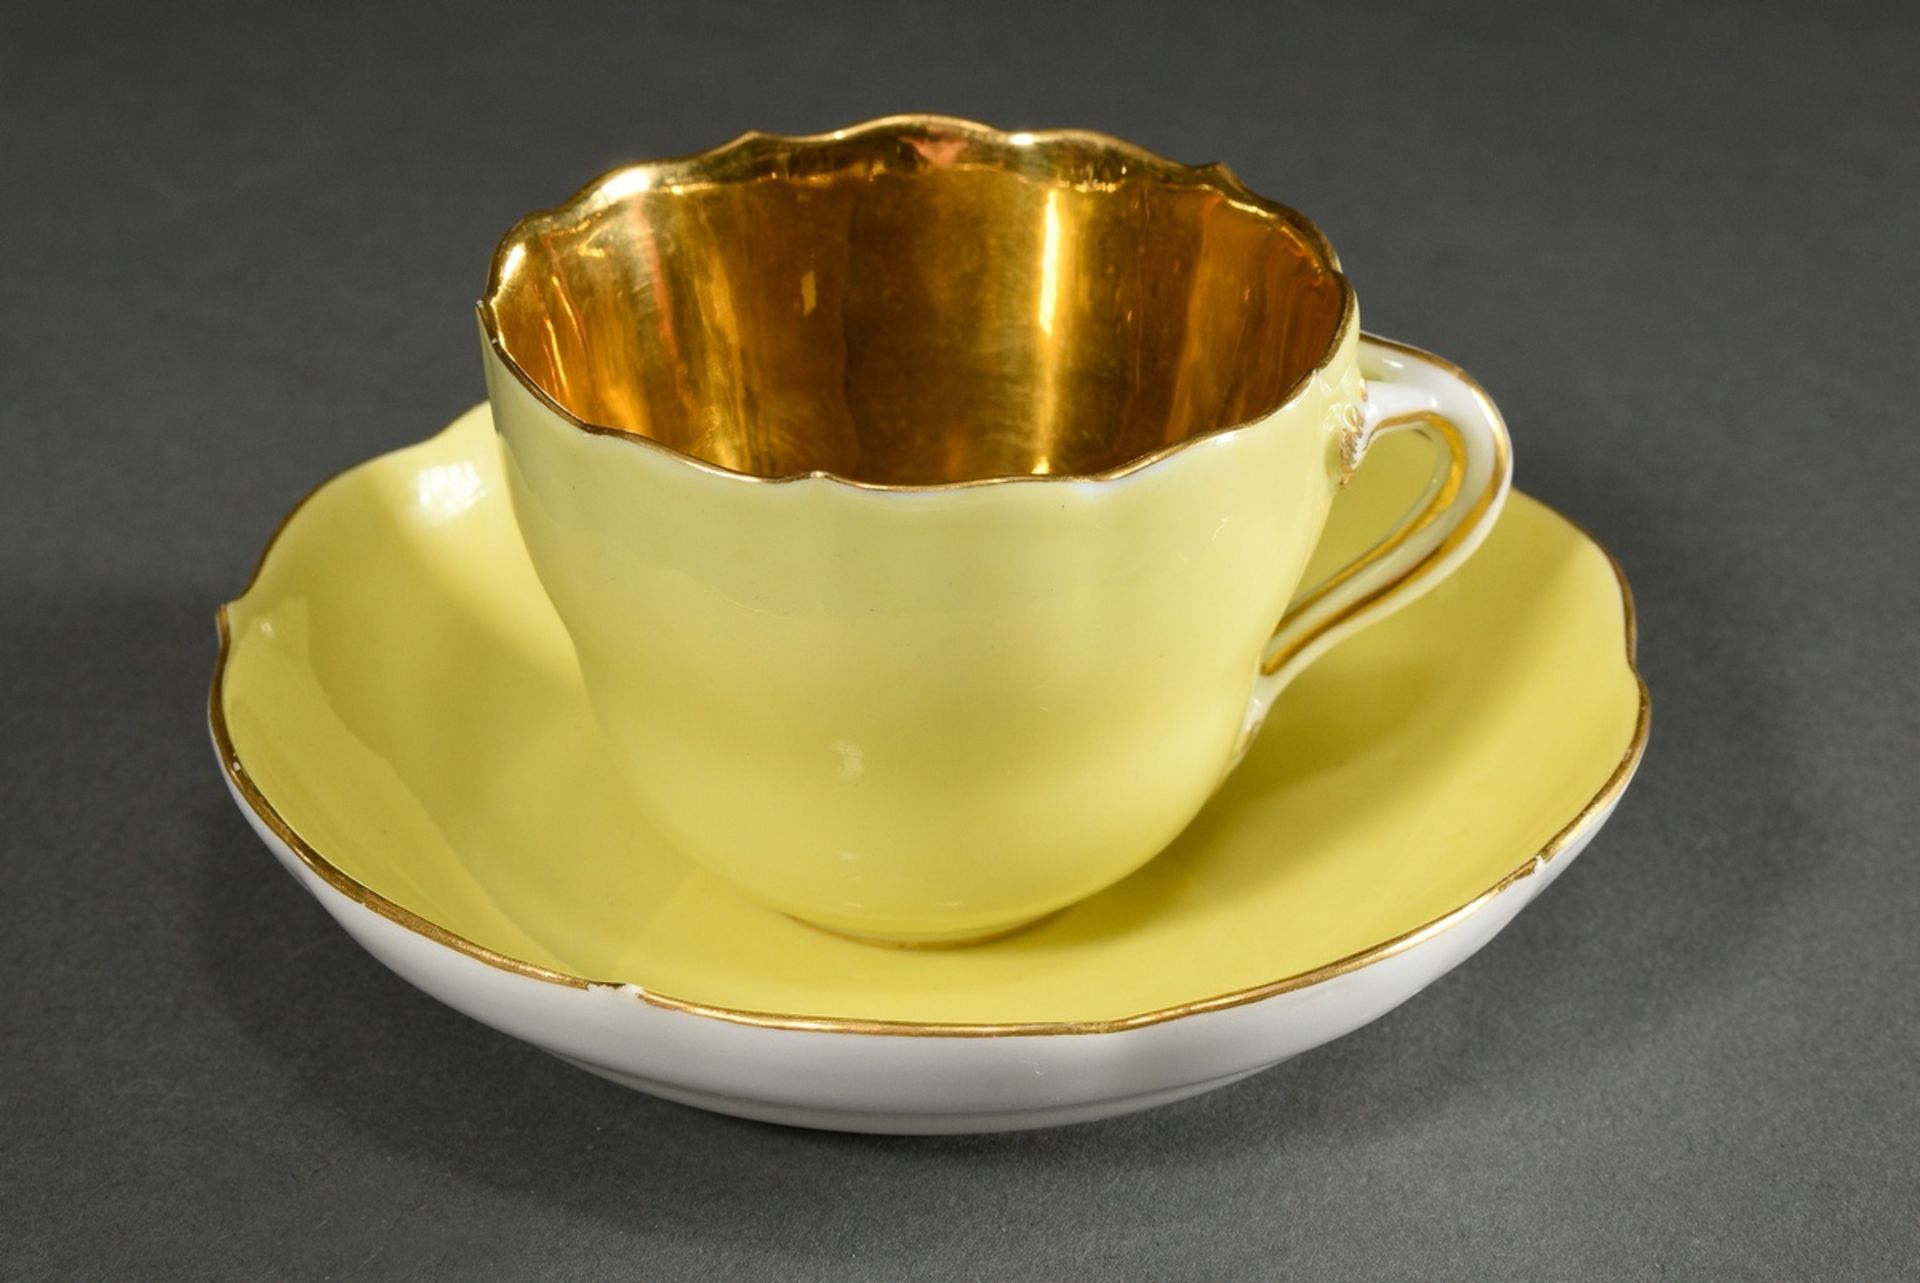 Meissen demitasse cup/saucer in monochrome lemon yellow, gilded inside, 1924-1934, h. 5cm, min. rub - Image 2 of 3